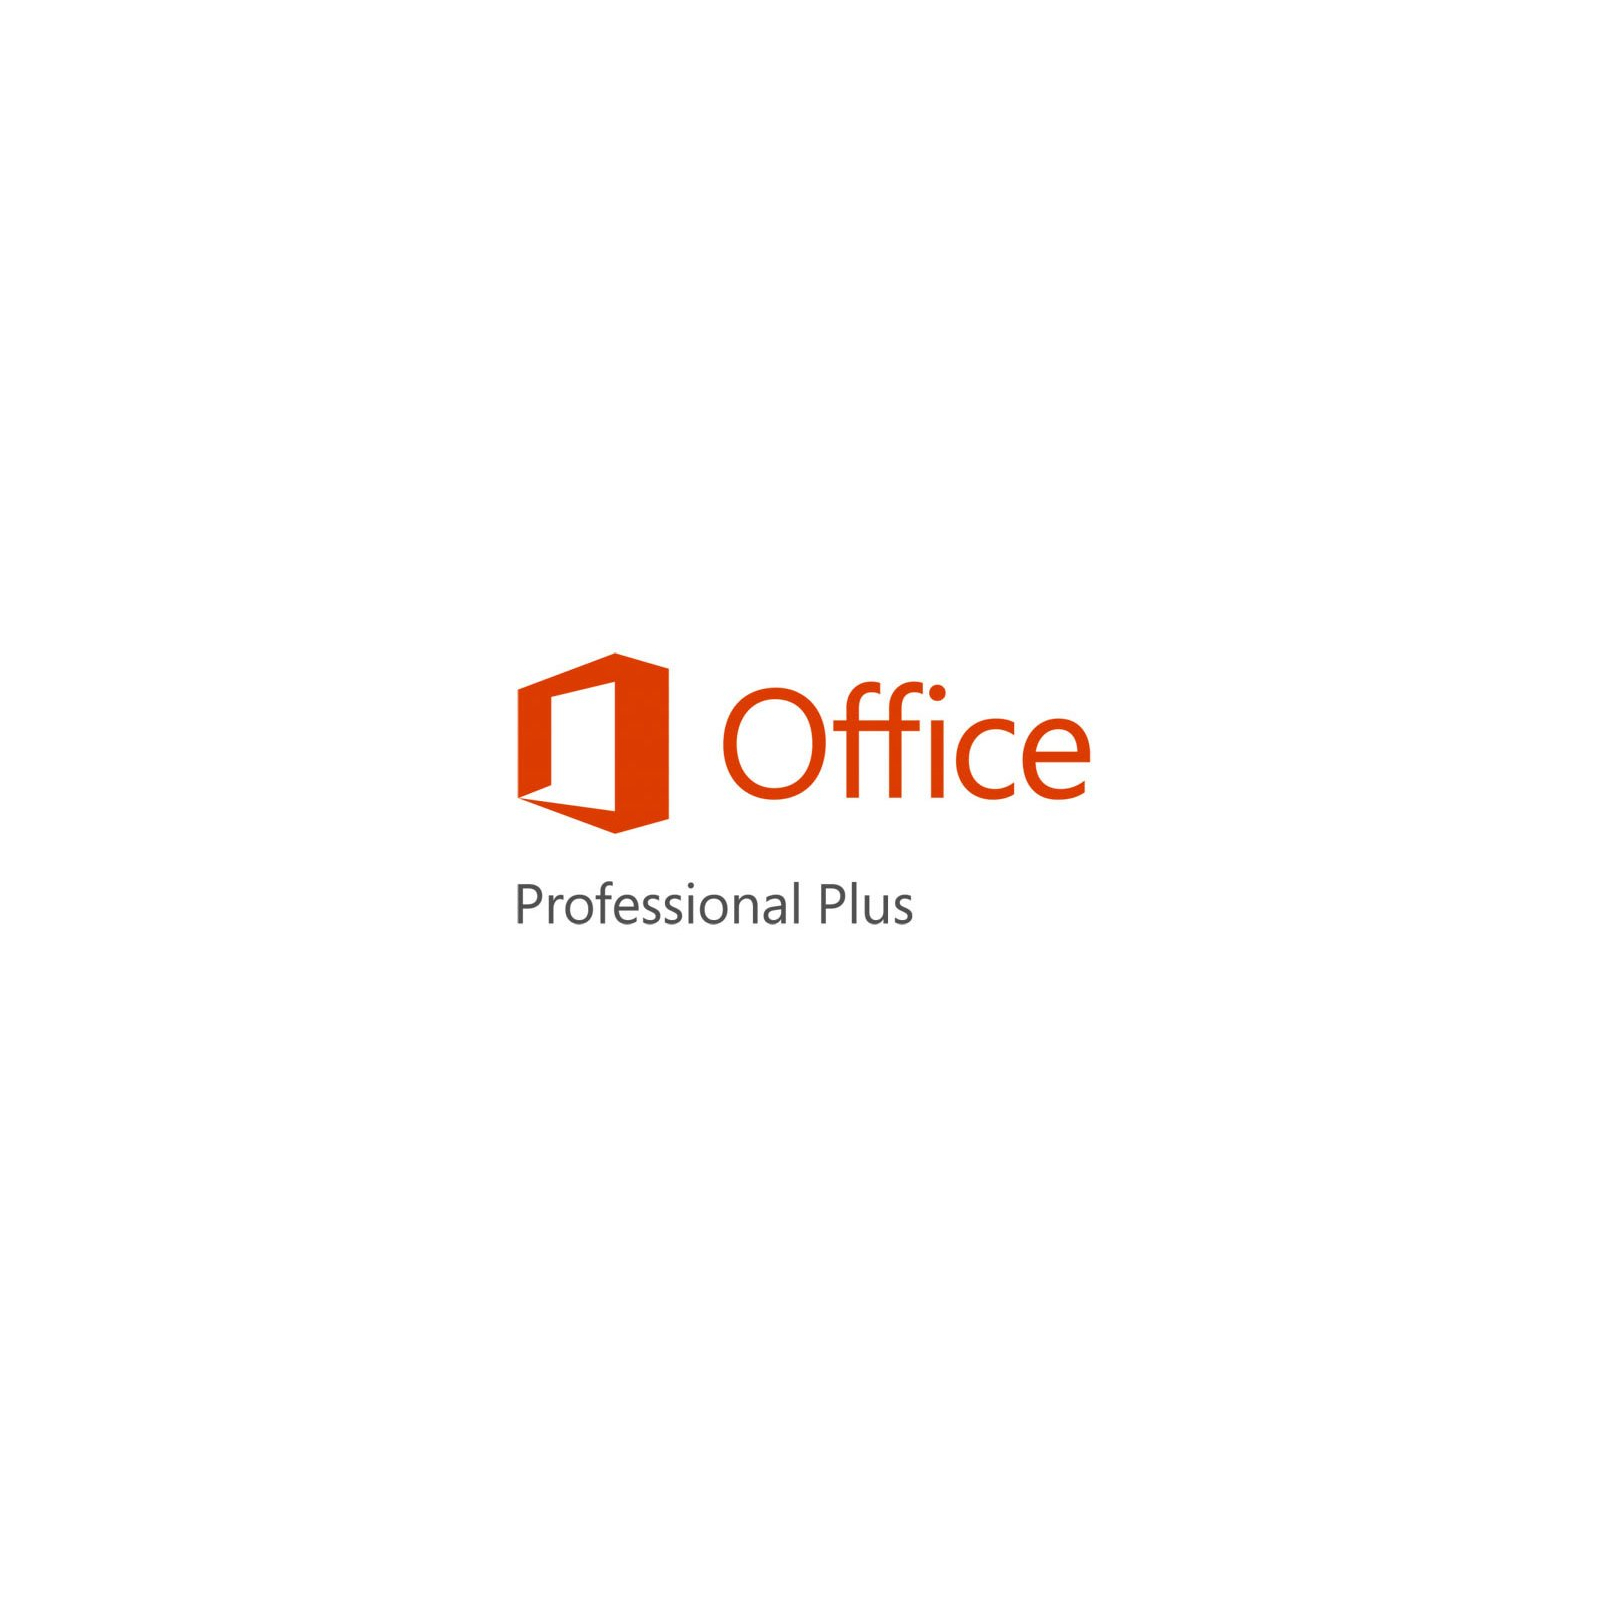 Программная продукция Microsoft OfficeProPlus 2016 UKR OLP NL Acdmc (79P-05548)